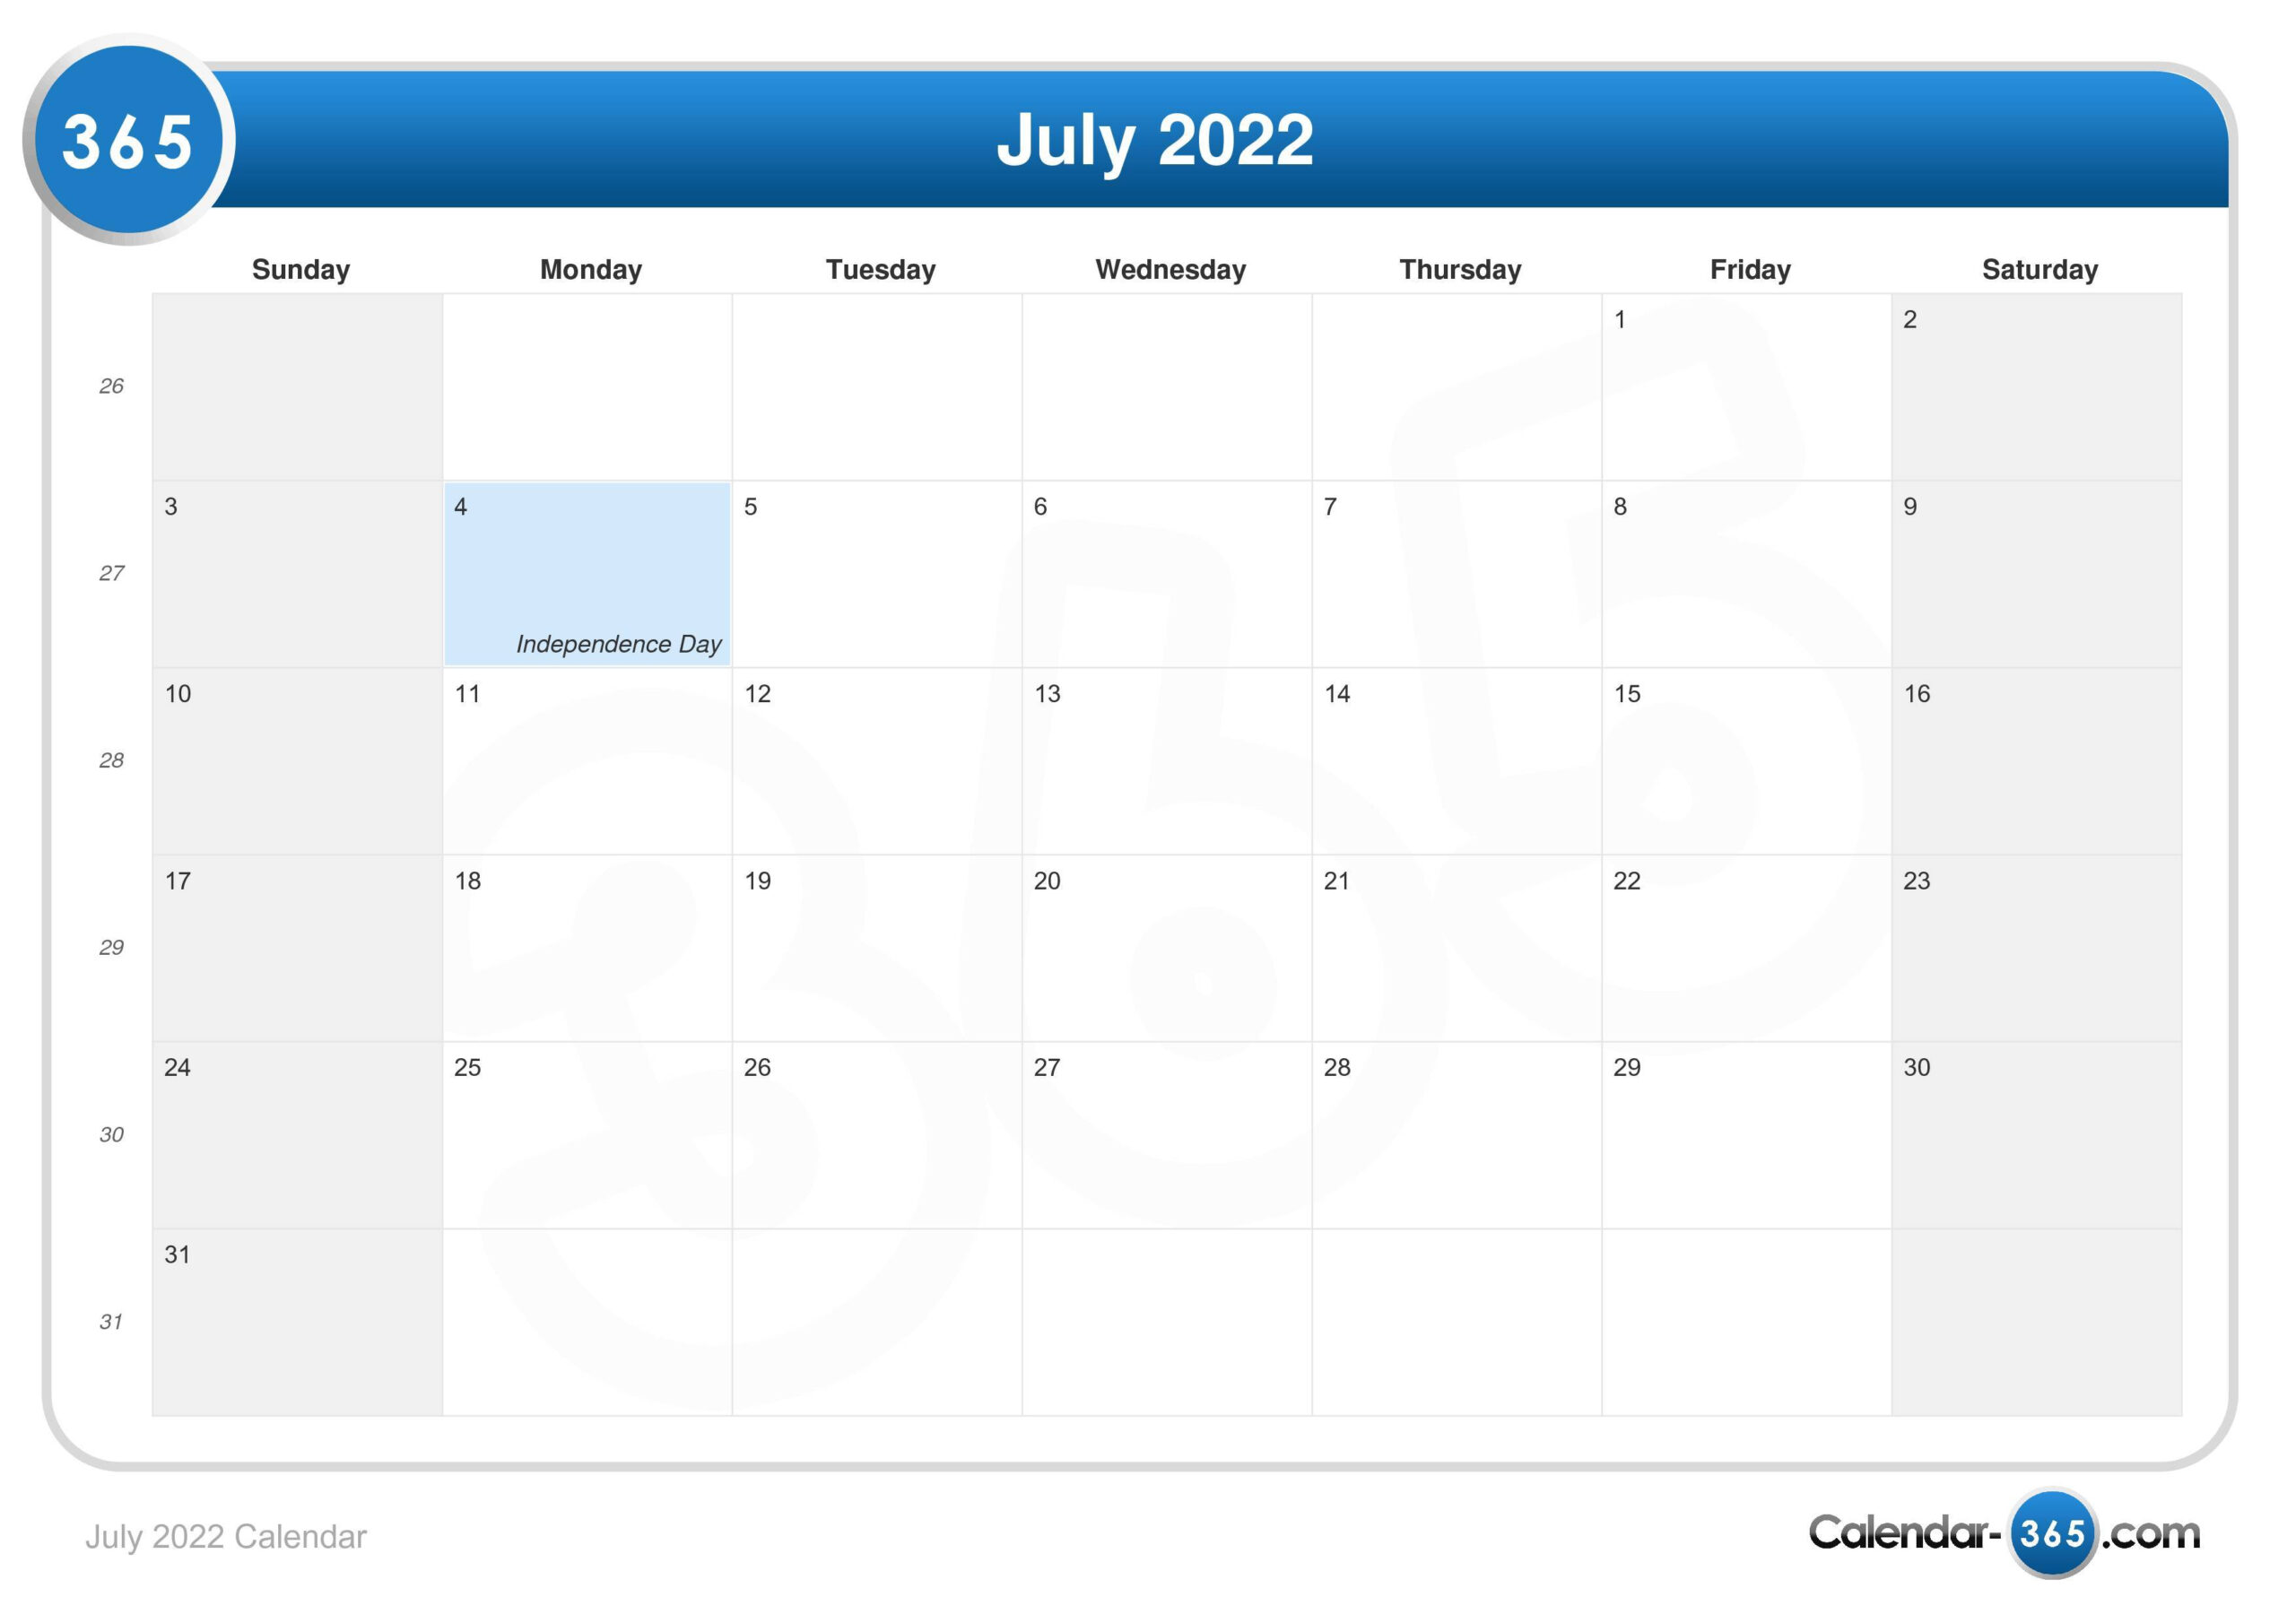 Get Calendar 2022 July Month